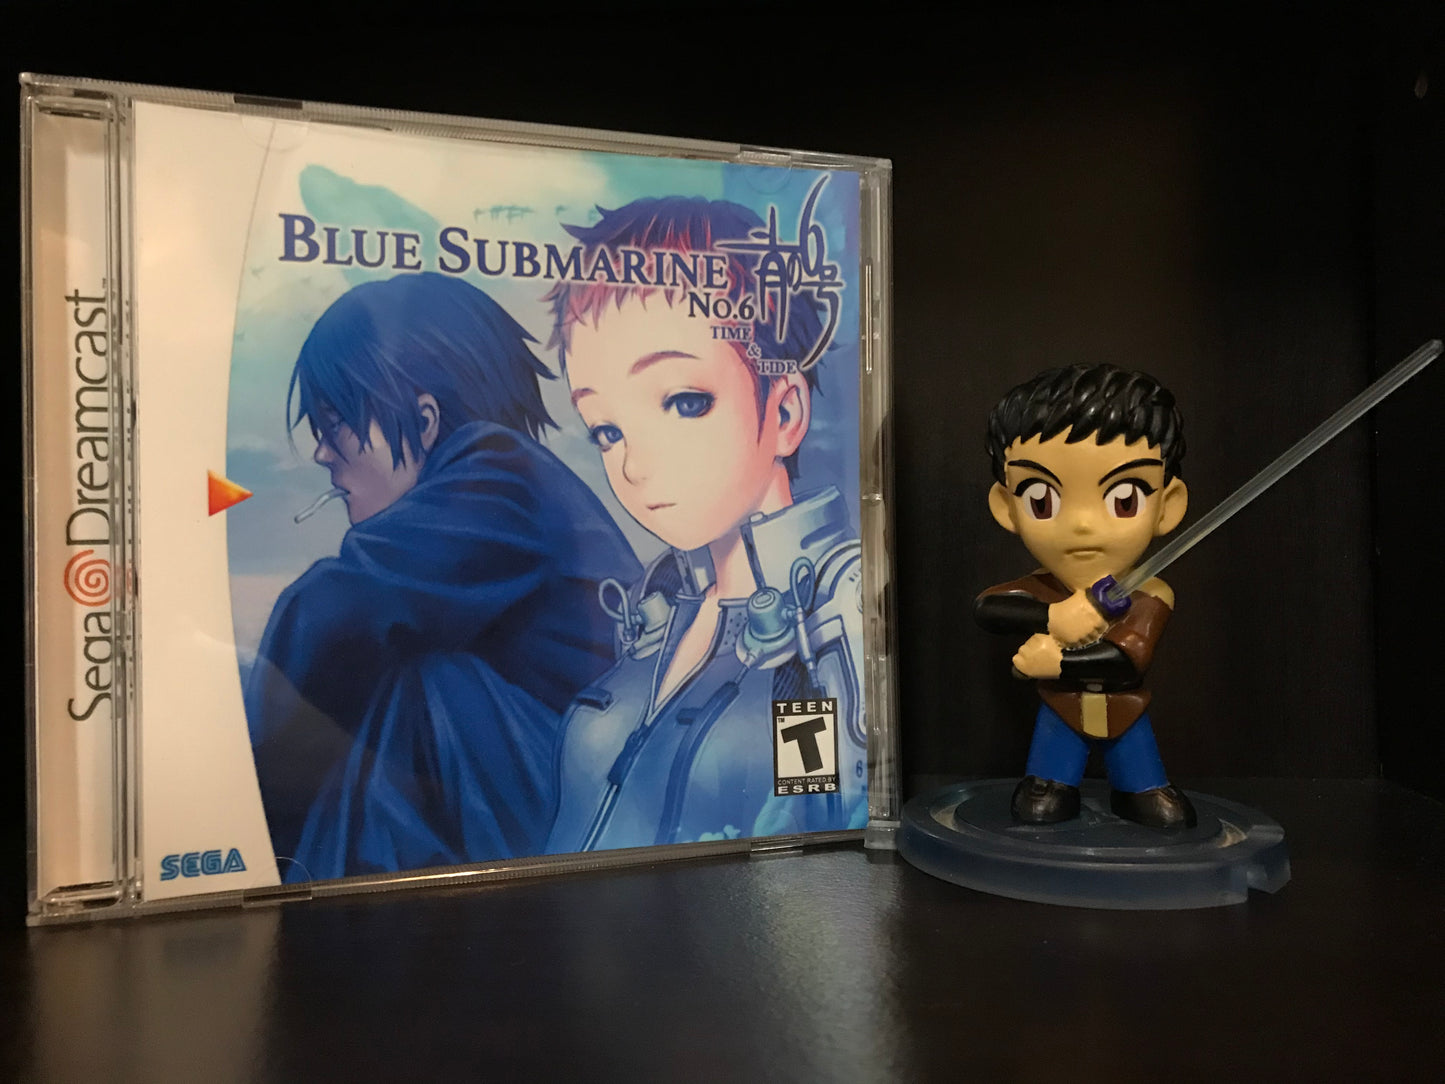 Blue Submarine (English Translation) [Sega Dreamcast] Reproduction